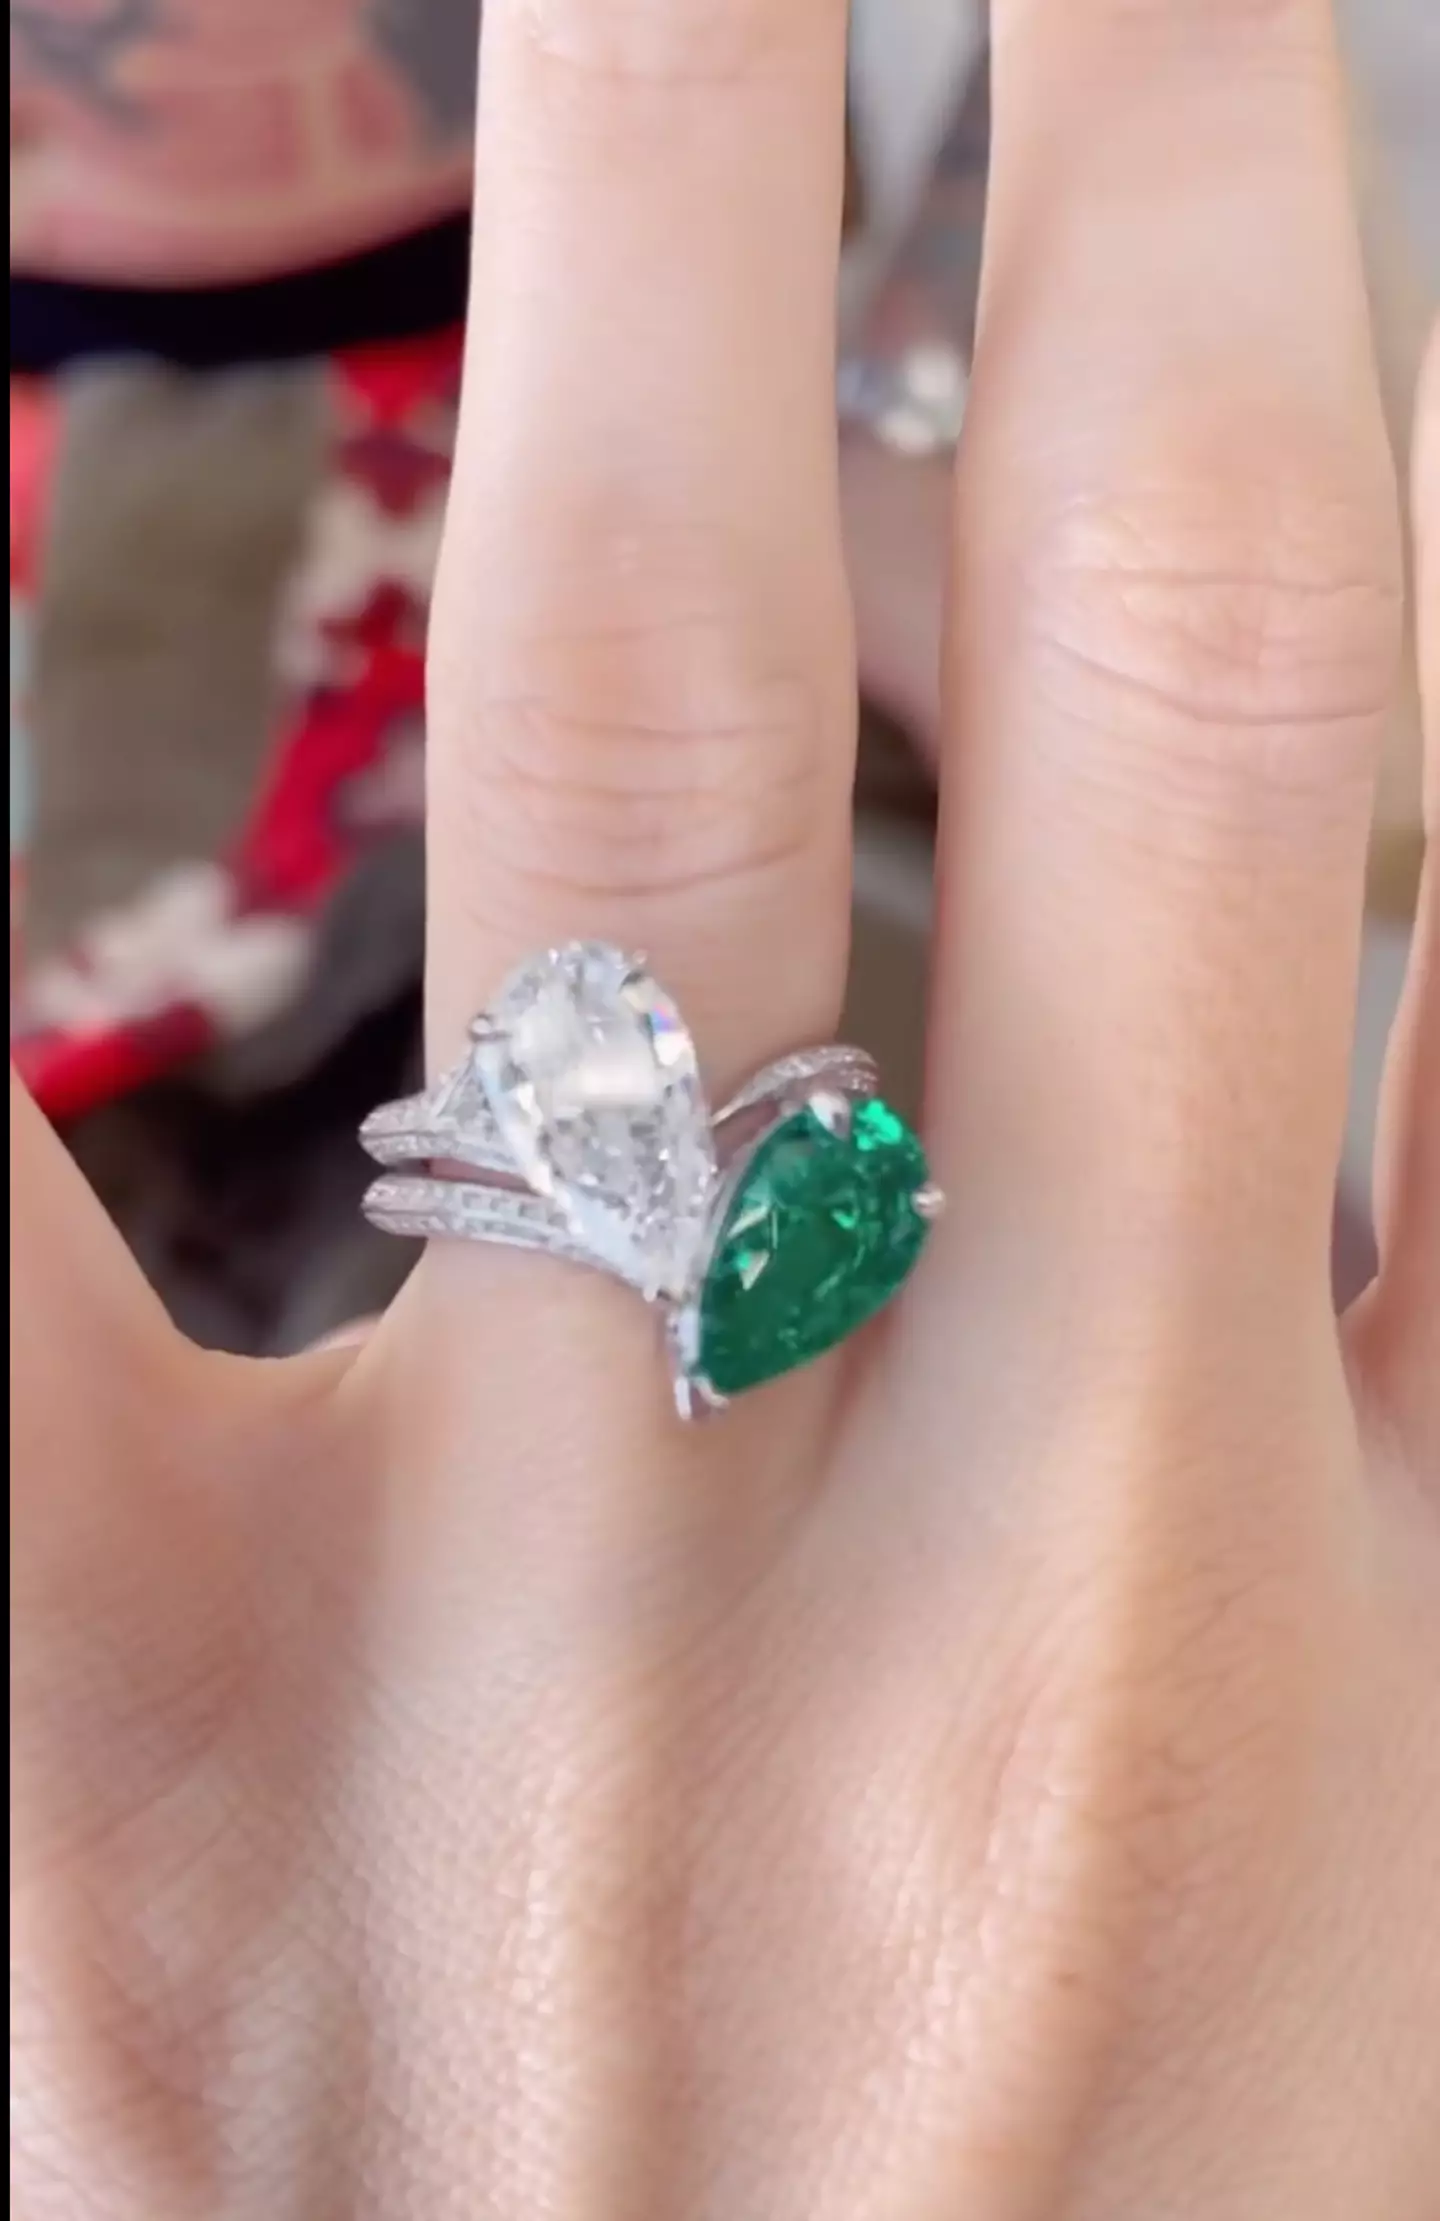 Megan's engagement ring. (